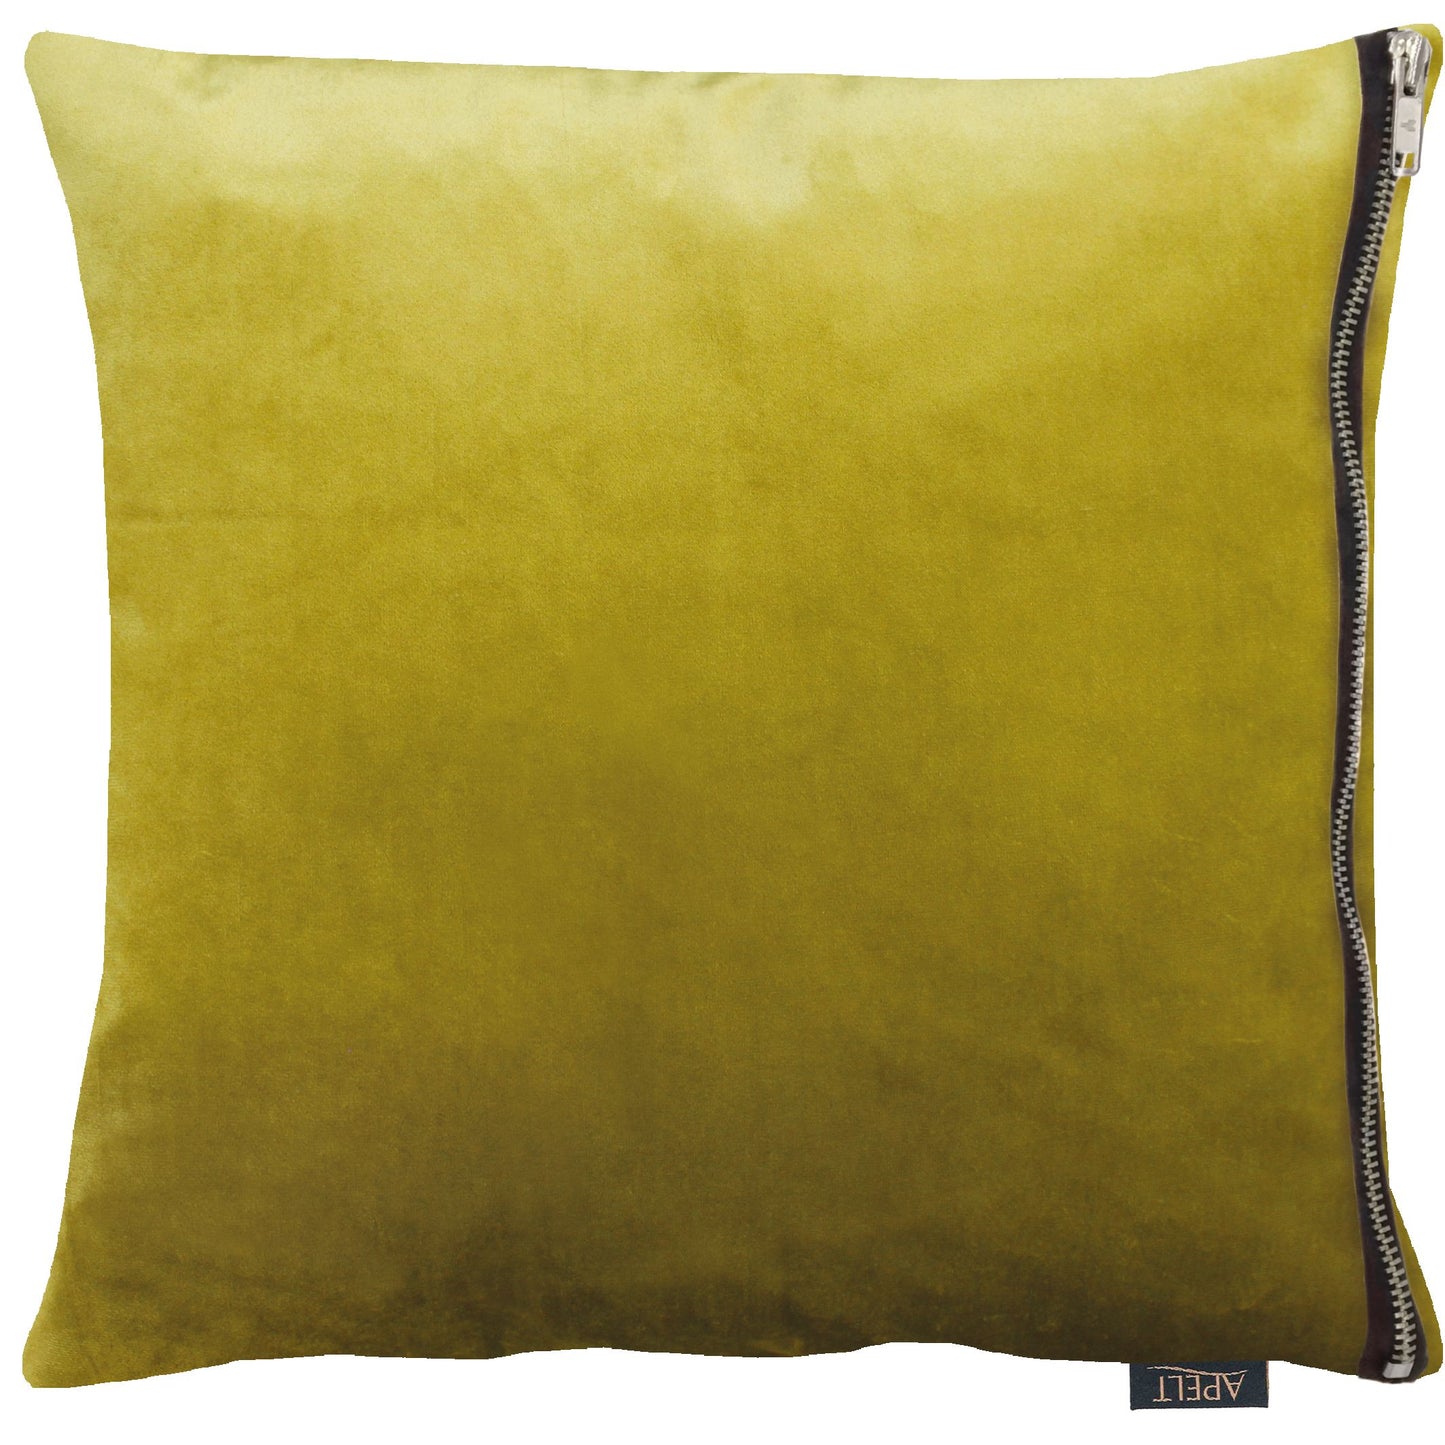 Apelt Tassilo velvet cushion in chartreuse with statement zip